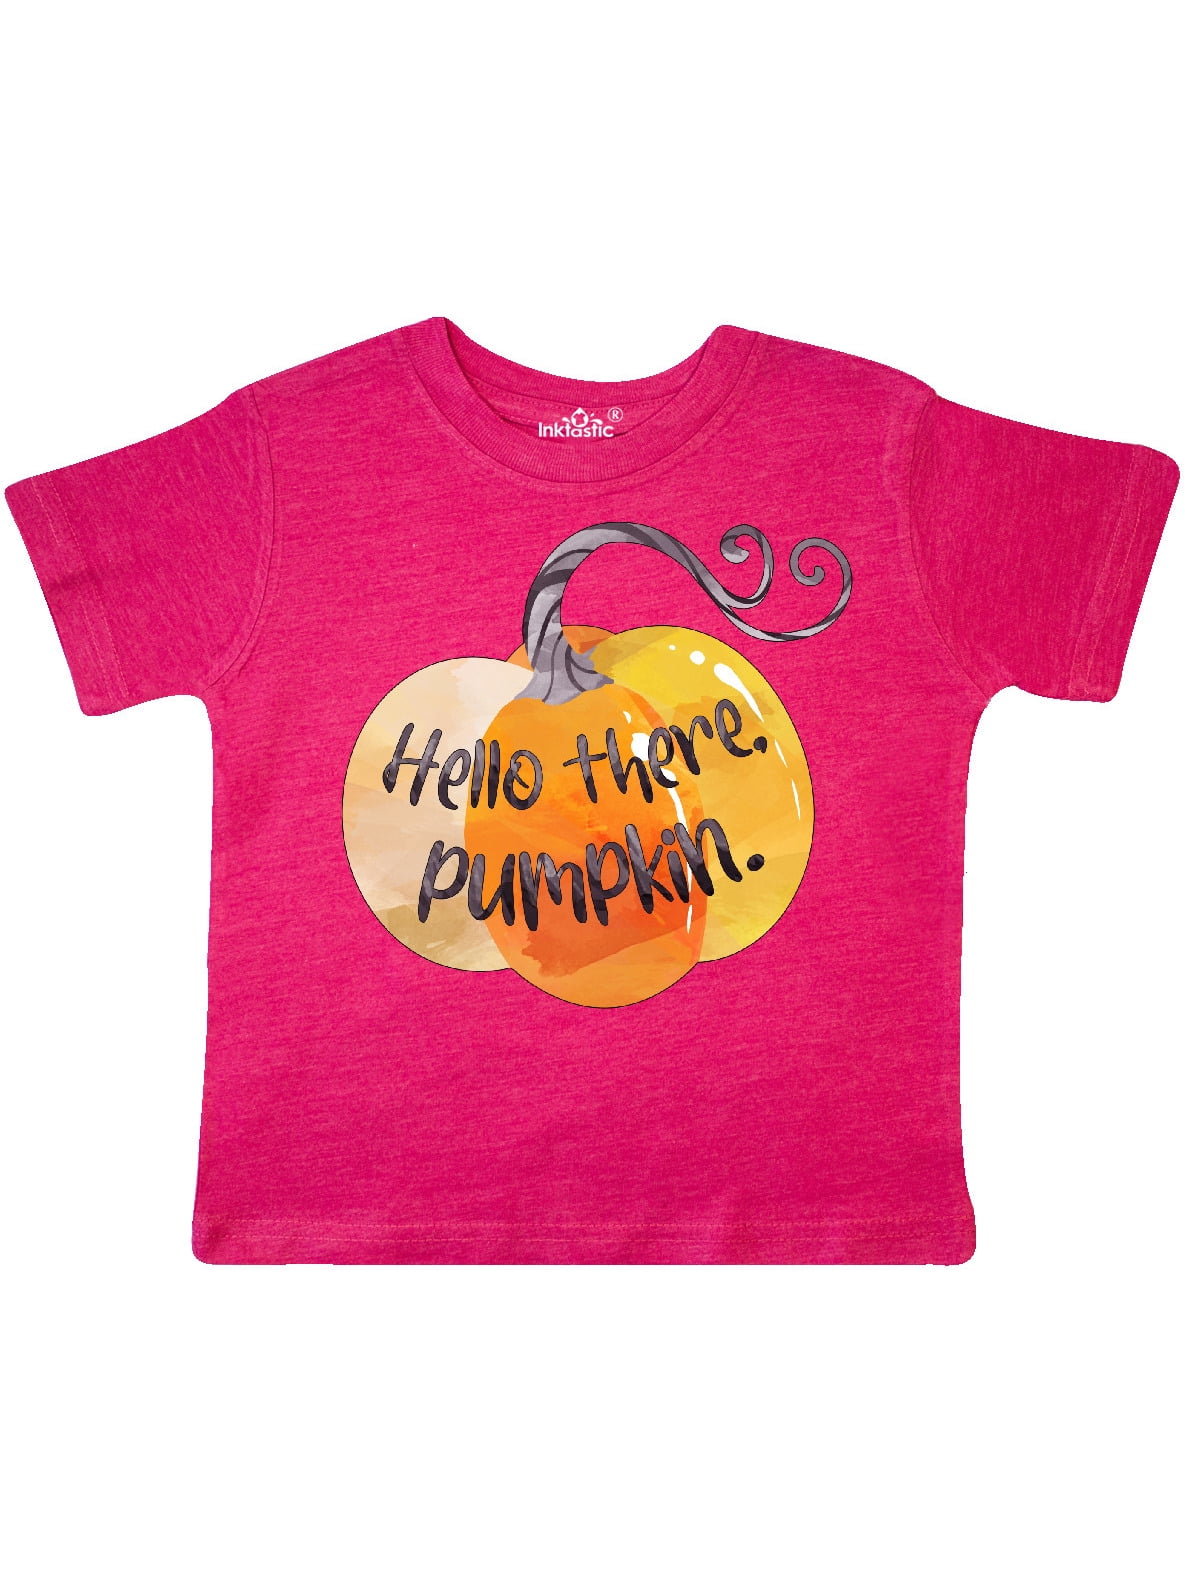 Toddler Shirt Hey There Pumpkin